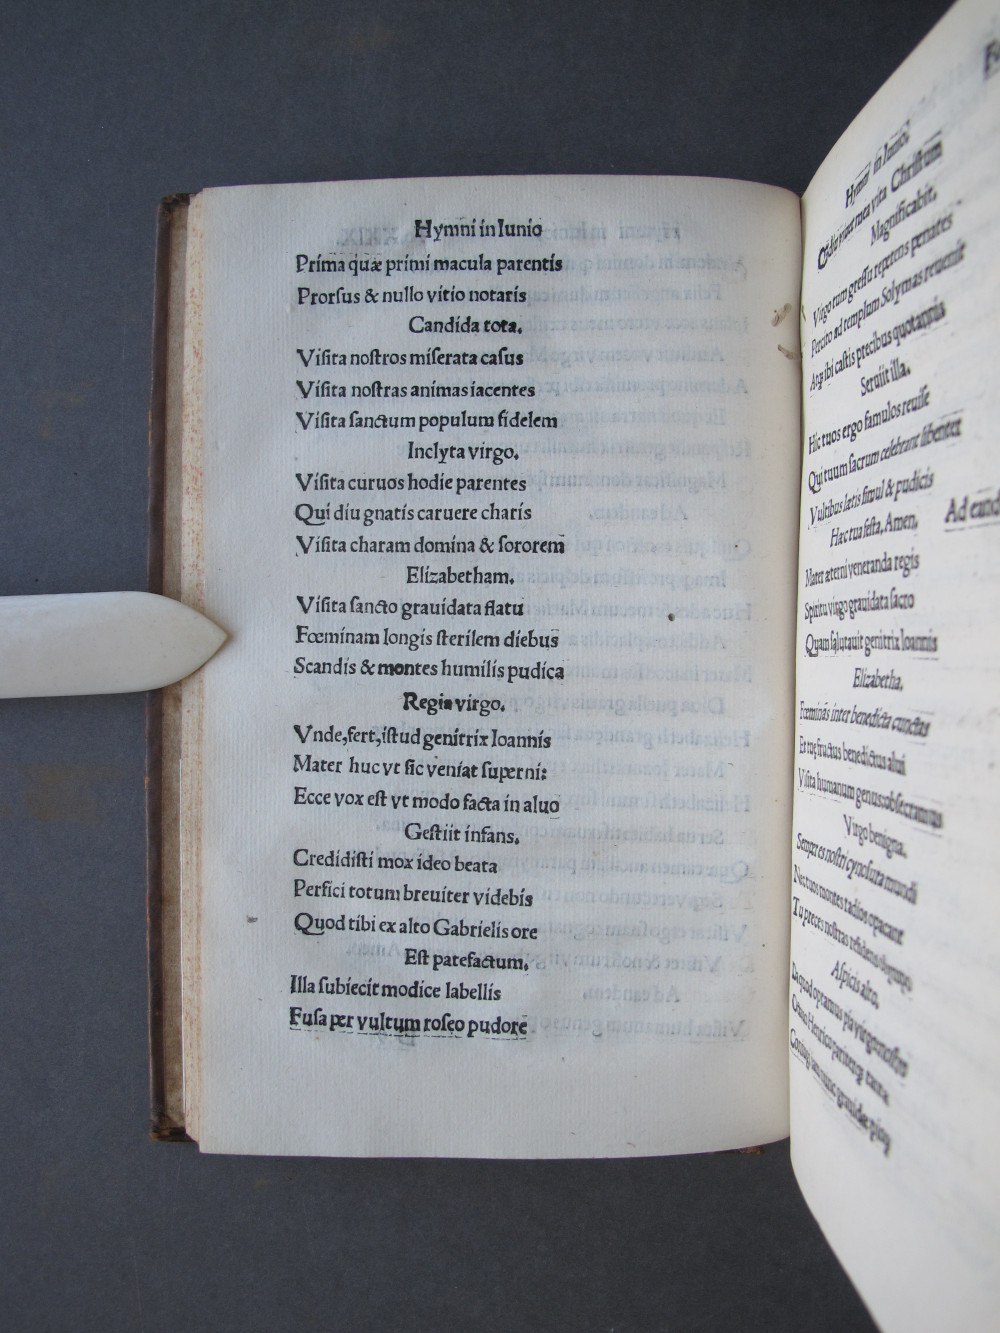 Folio 29 verso